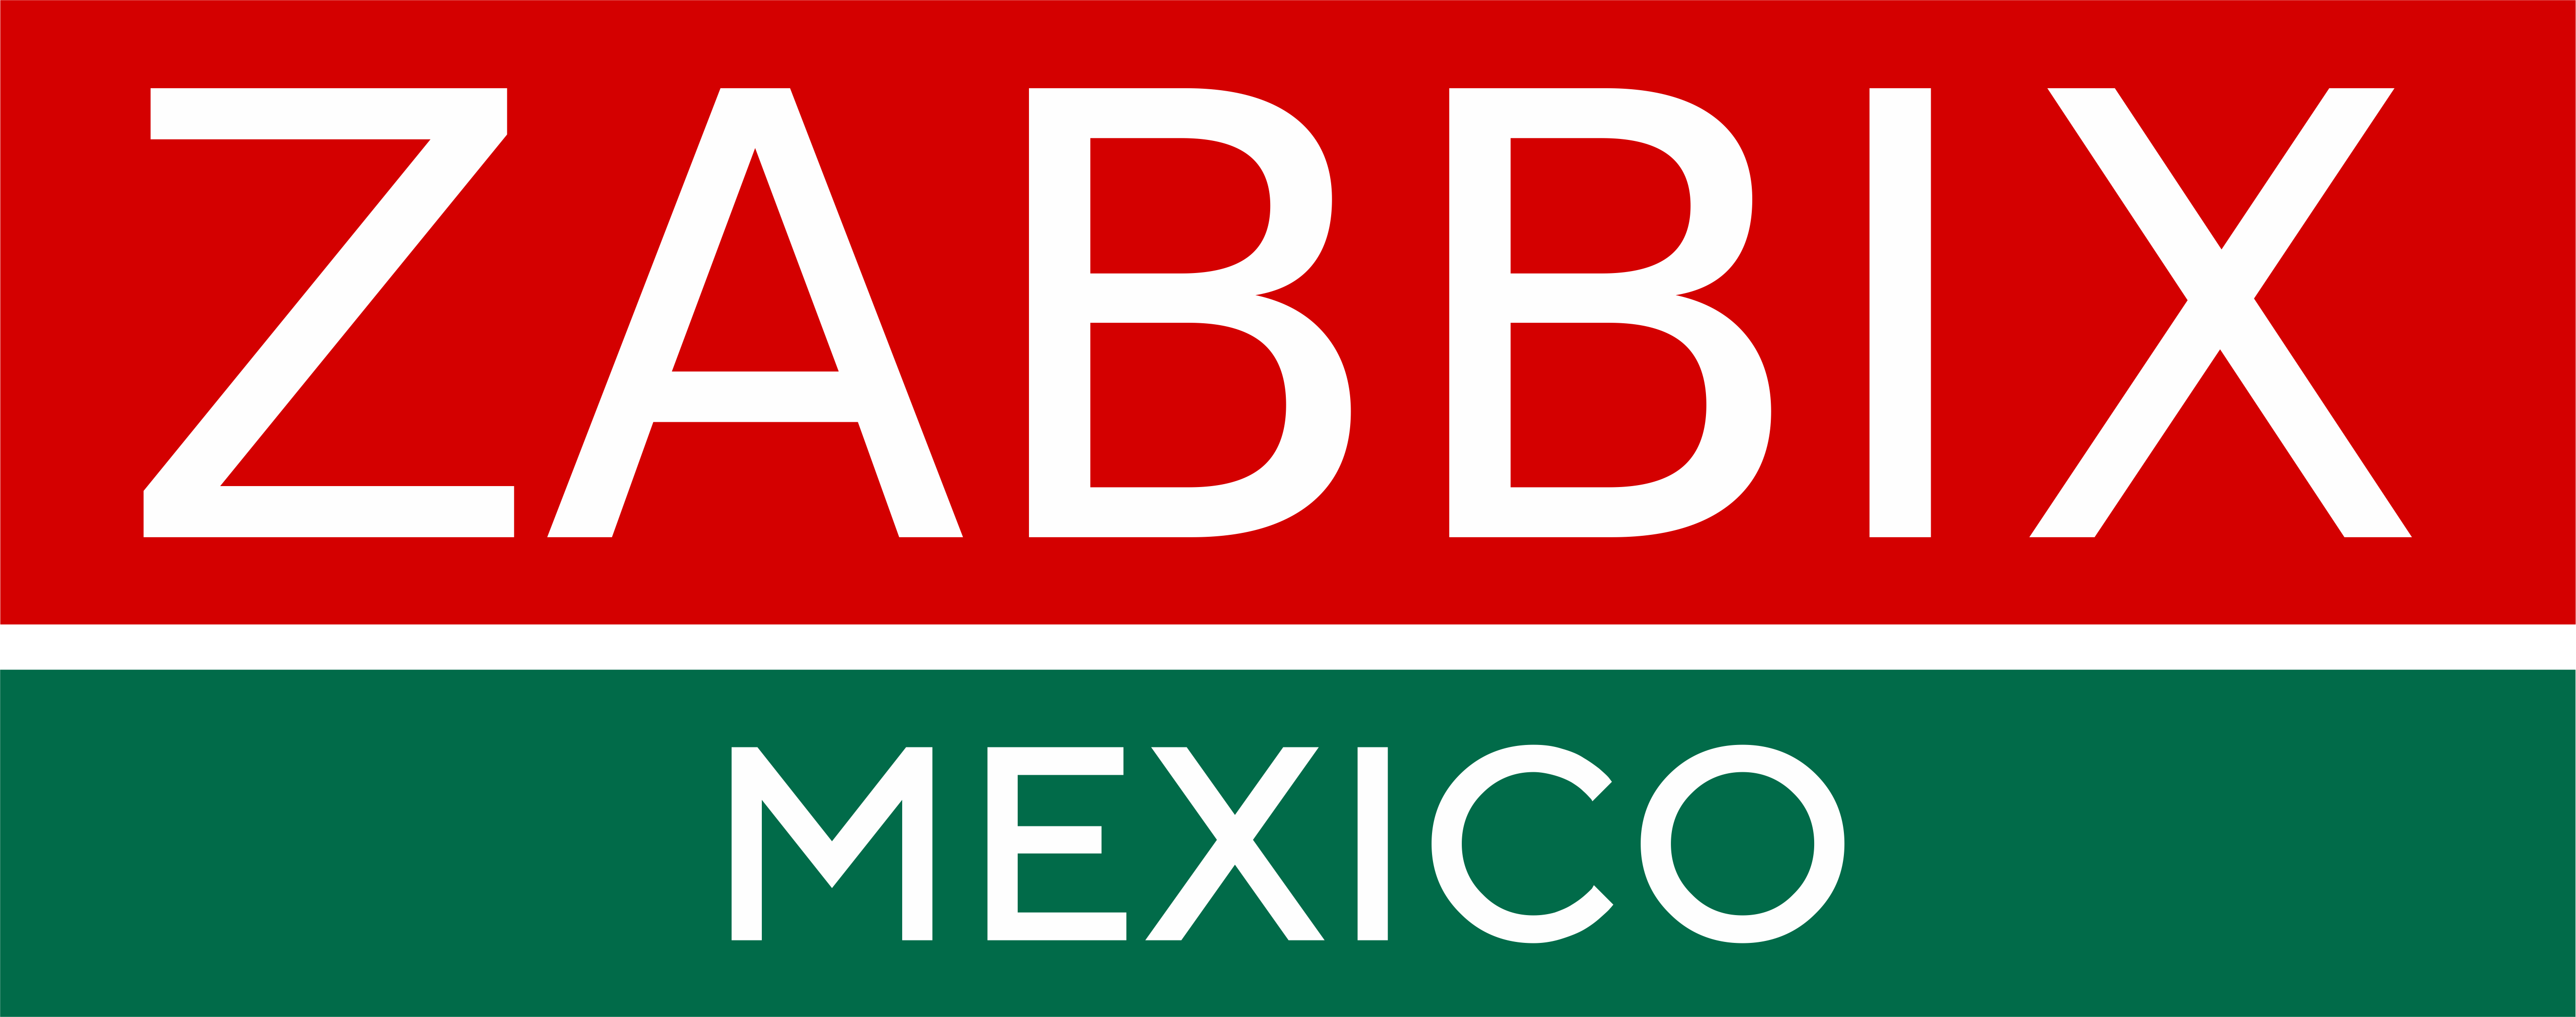 Zabbix Mexico Office Opening